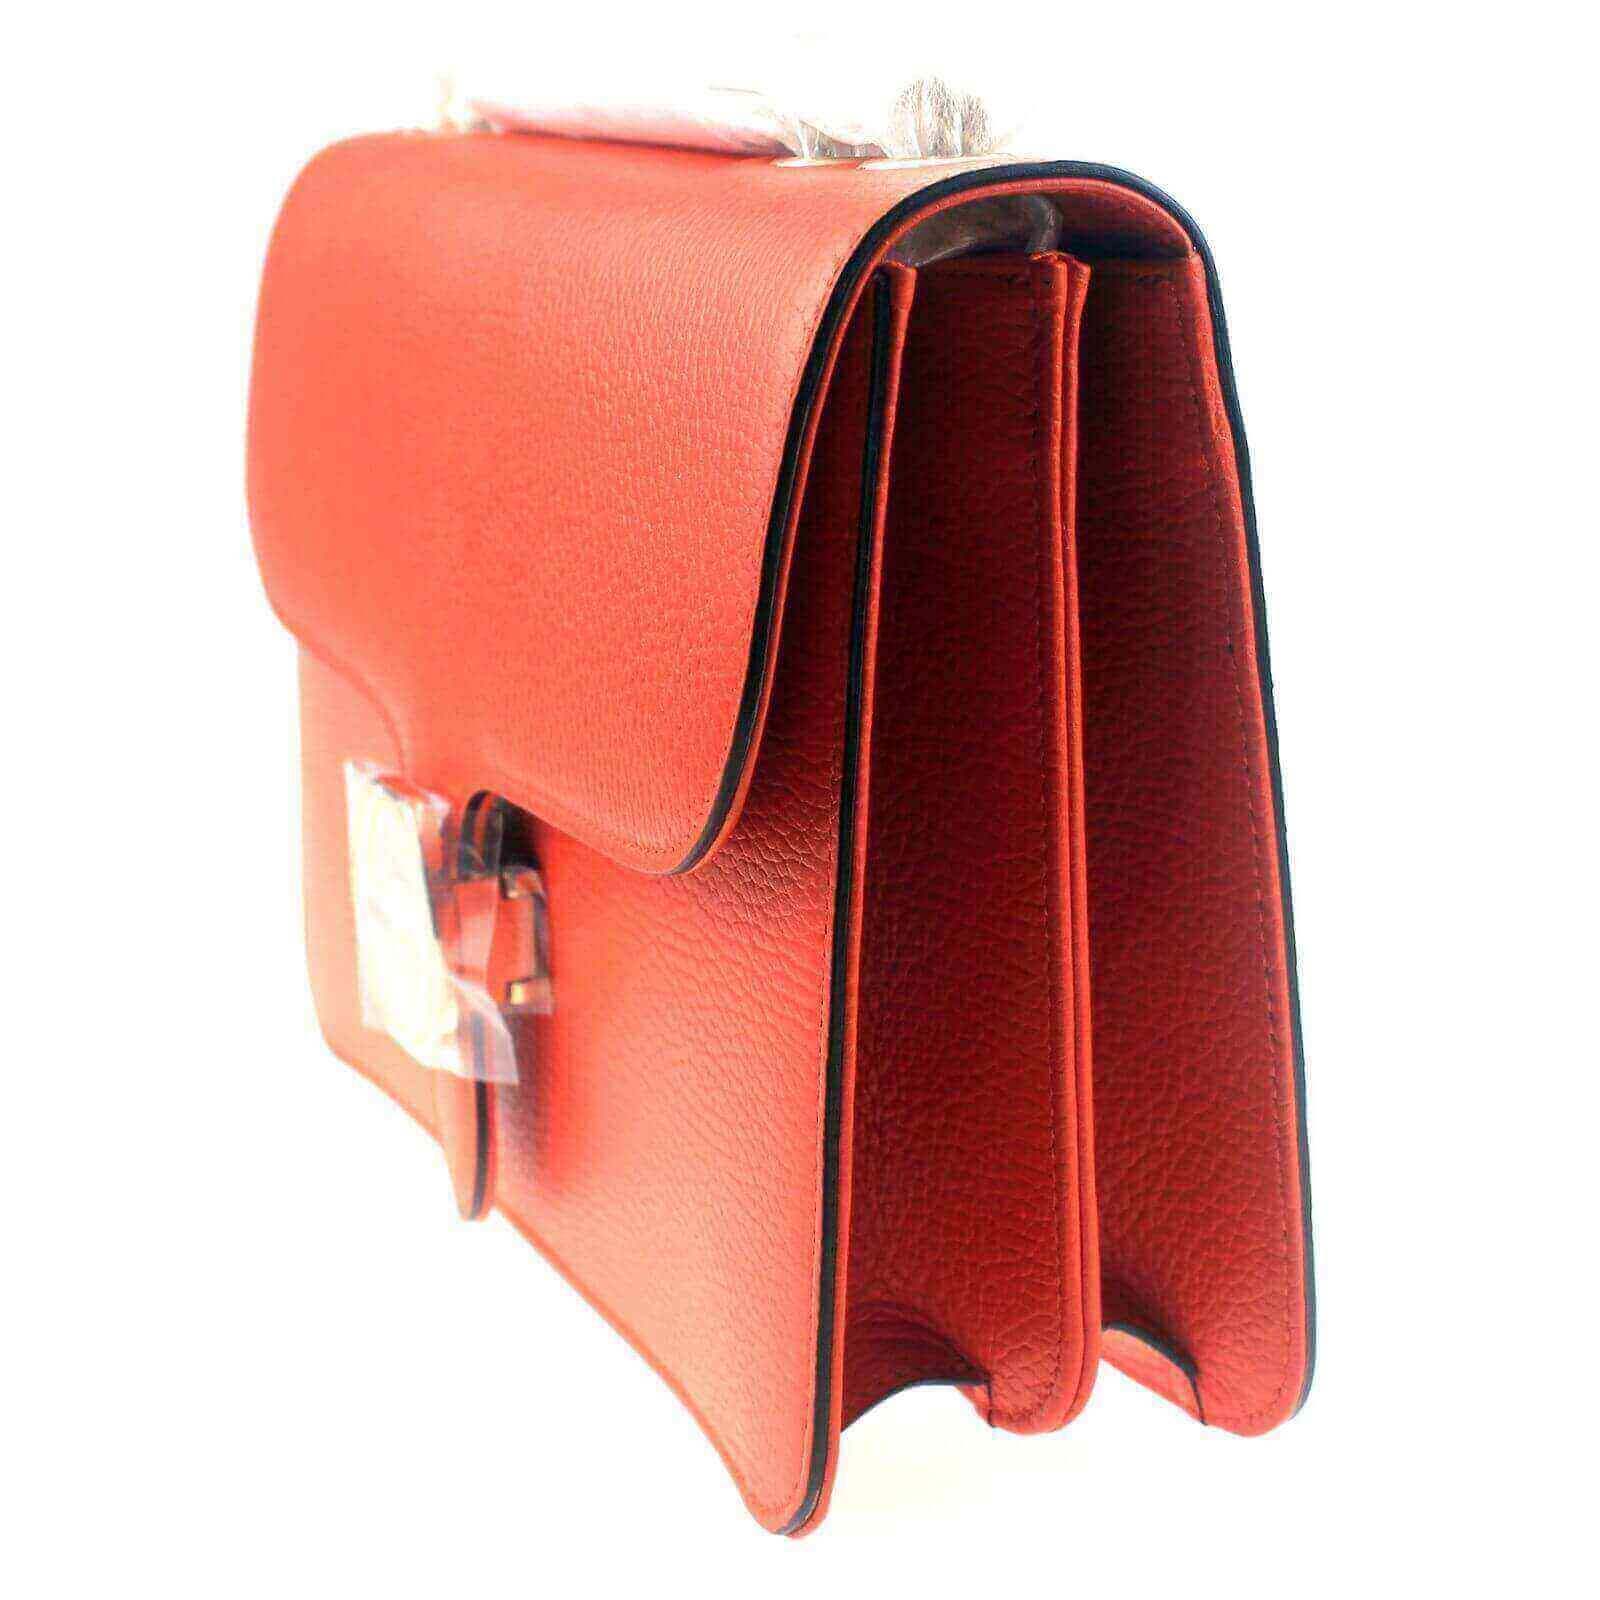 Large Burnt Orange Gucci Handbag | eBay